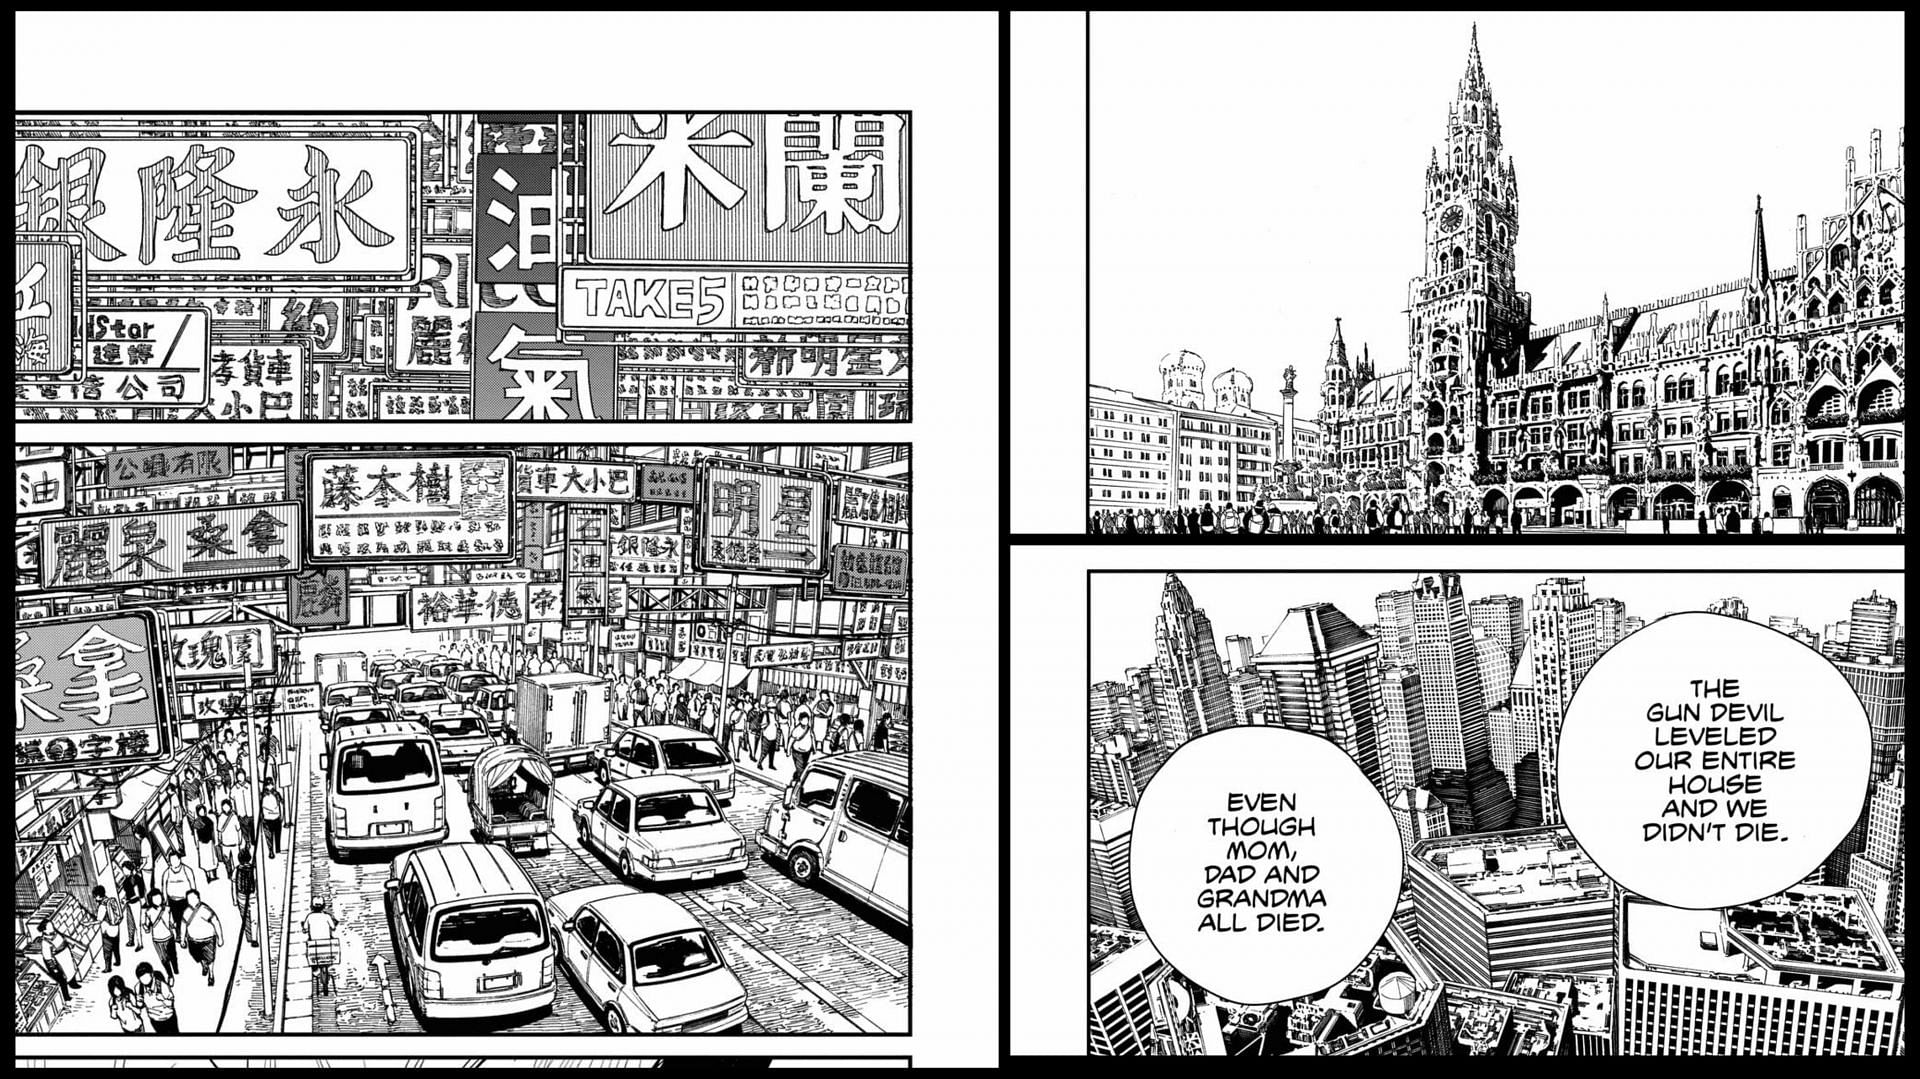 Different countries as seen in the manga (Image via Shueisha)